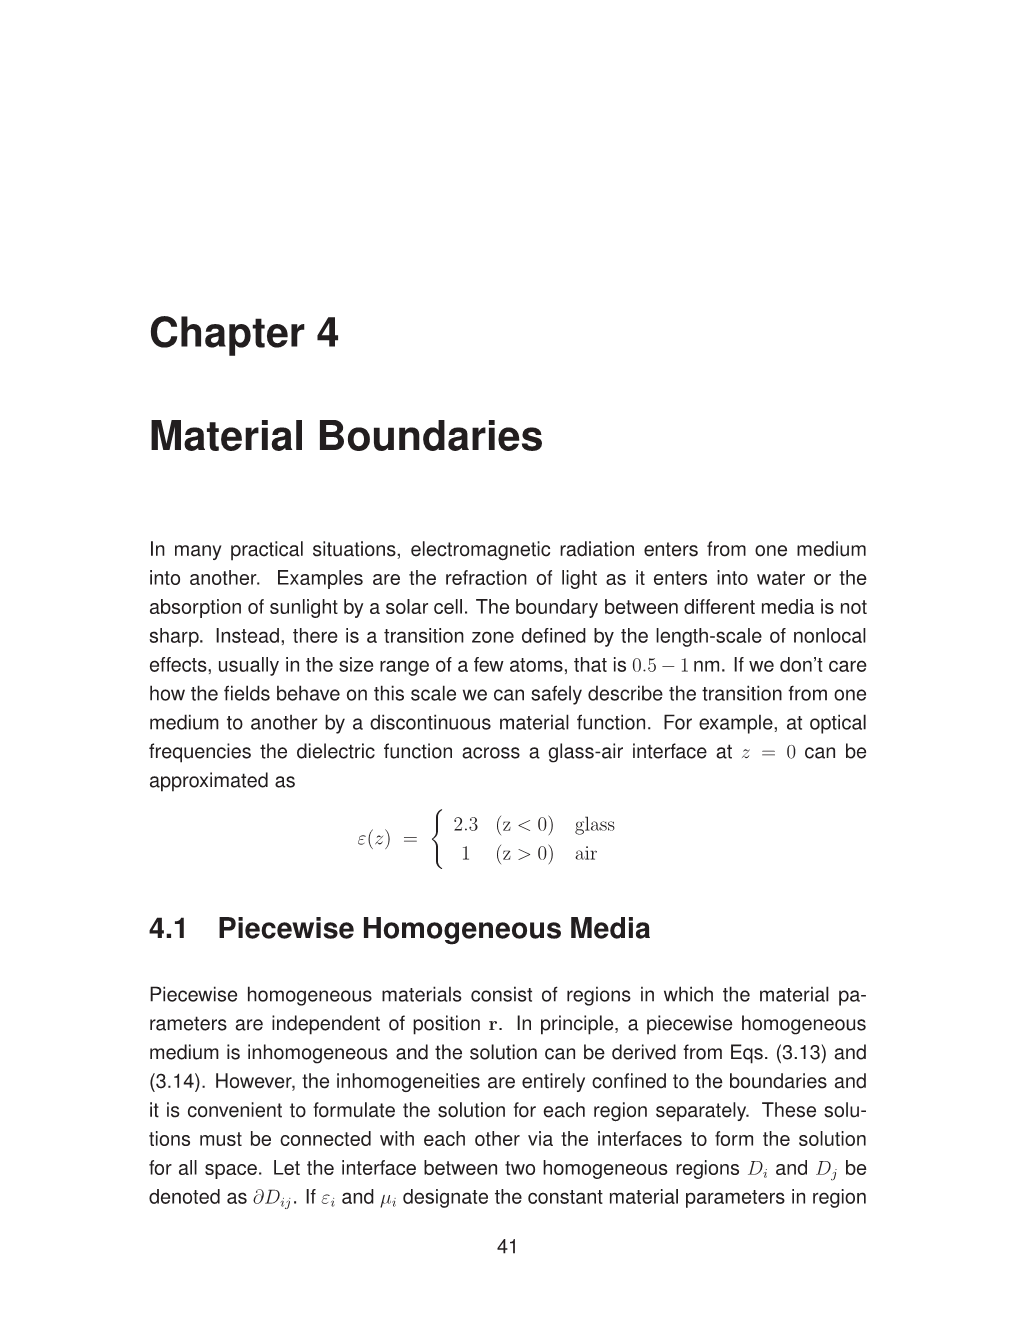 Chapter 4 Material Boundaries